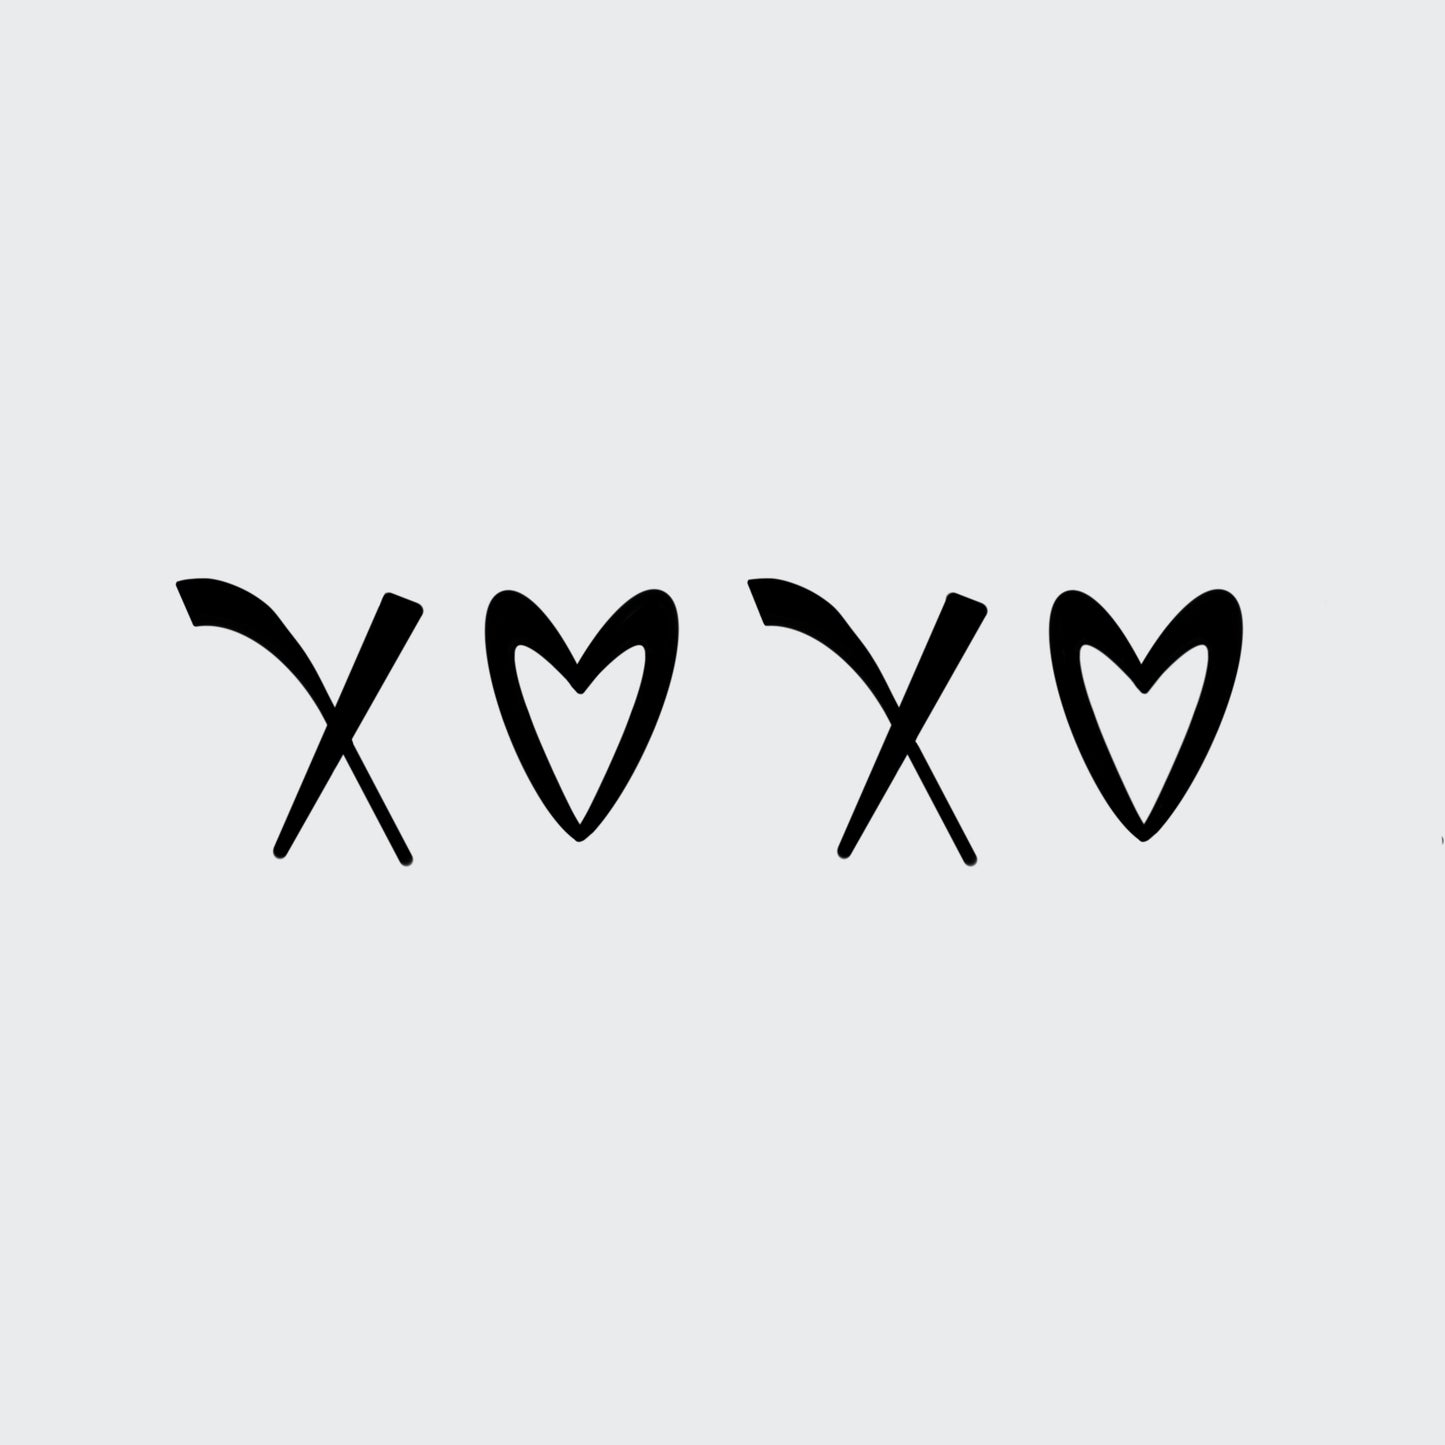 XOXO with hearts - Acrylic Stamp